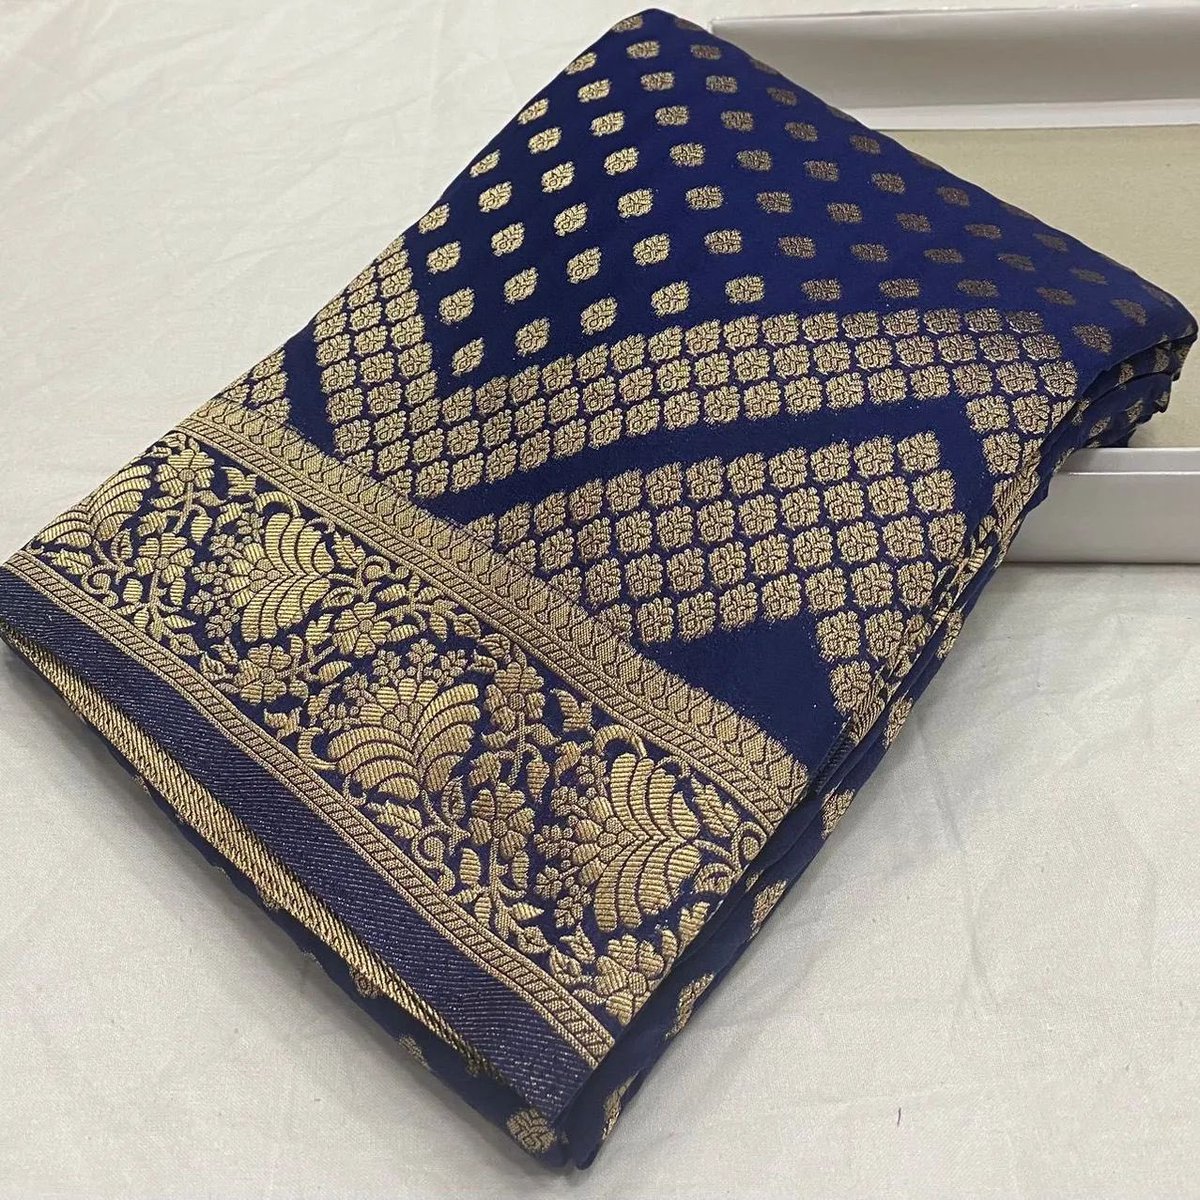 New Design Georgette Silk Double Zari Gold  Saree 
Price- 2200/- 
Code-MO_1
#banarasi #banarasisaree #banarasisarees #banarasisilk #georgette #gown #handloomlove #indianwear #indianweddingwear #kurti #kurtis #lawnsuits #lehenga #madeinindia #onlineshopping